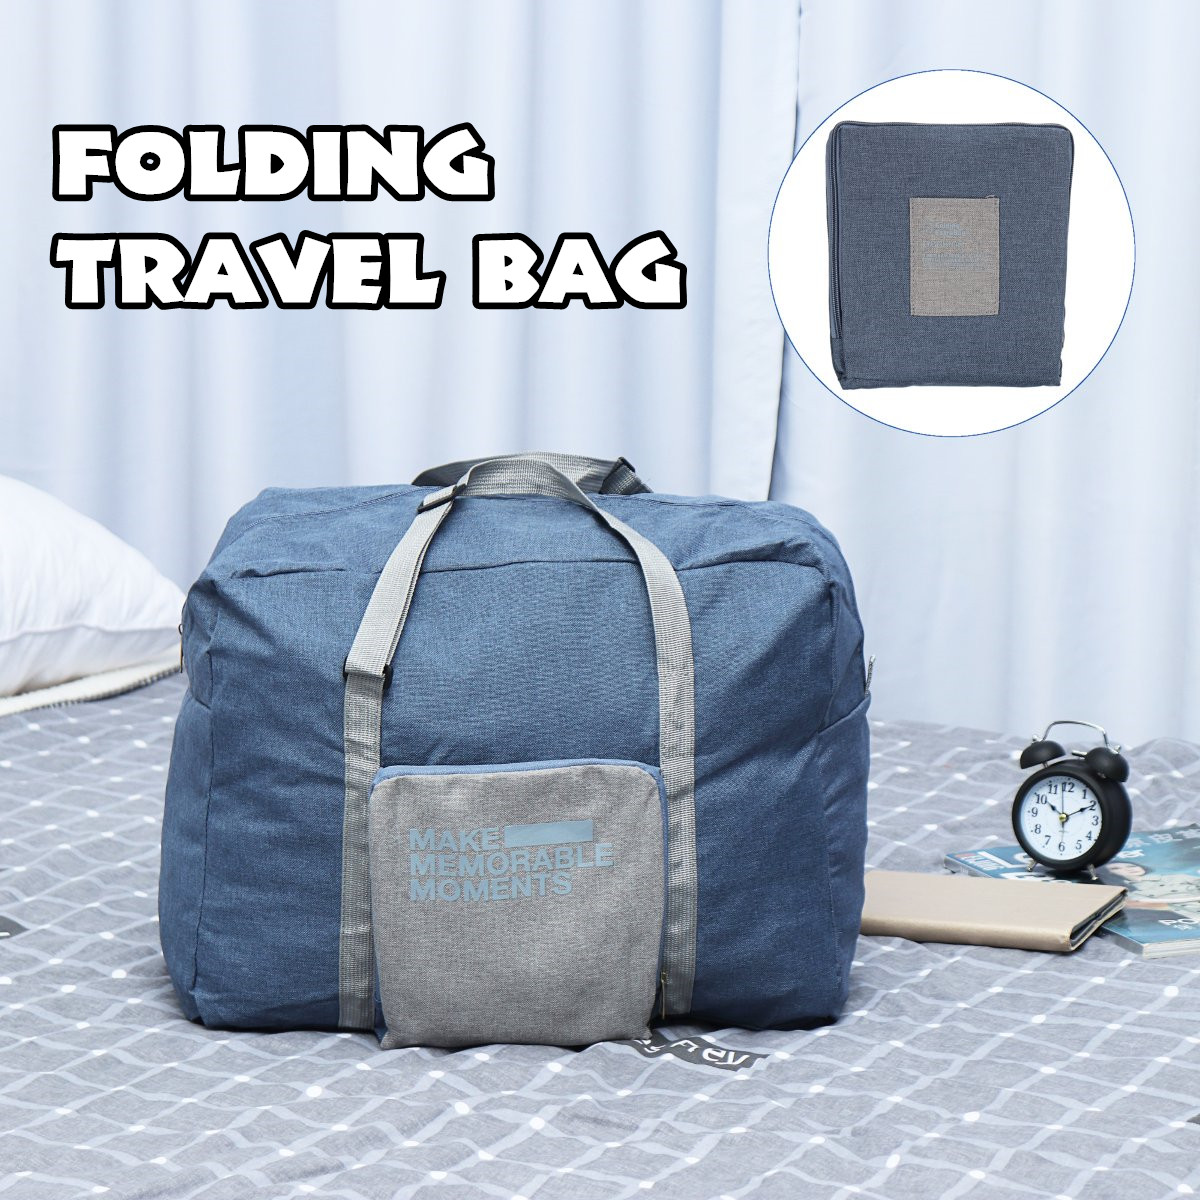 Travel-Waterproof-Bag-Luggage-Wardrobe-Suit-Dress-Garment-Carrier-Suiter-Case-Suitbag-Cover-Bag-1587166-1